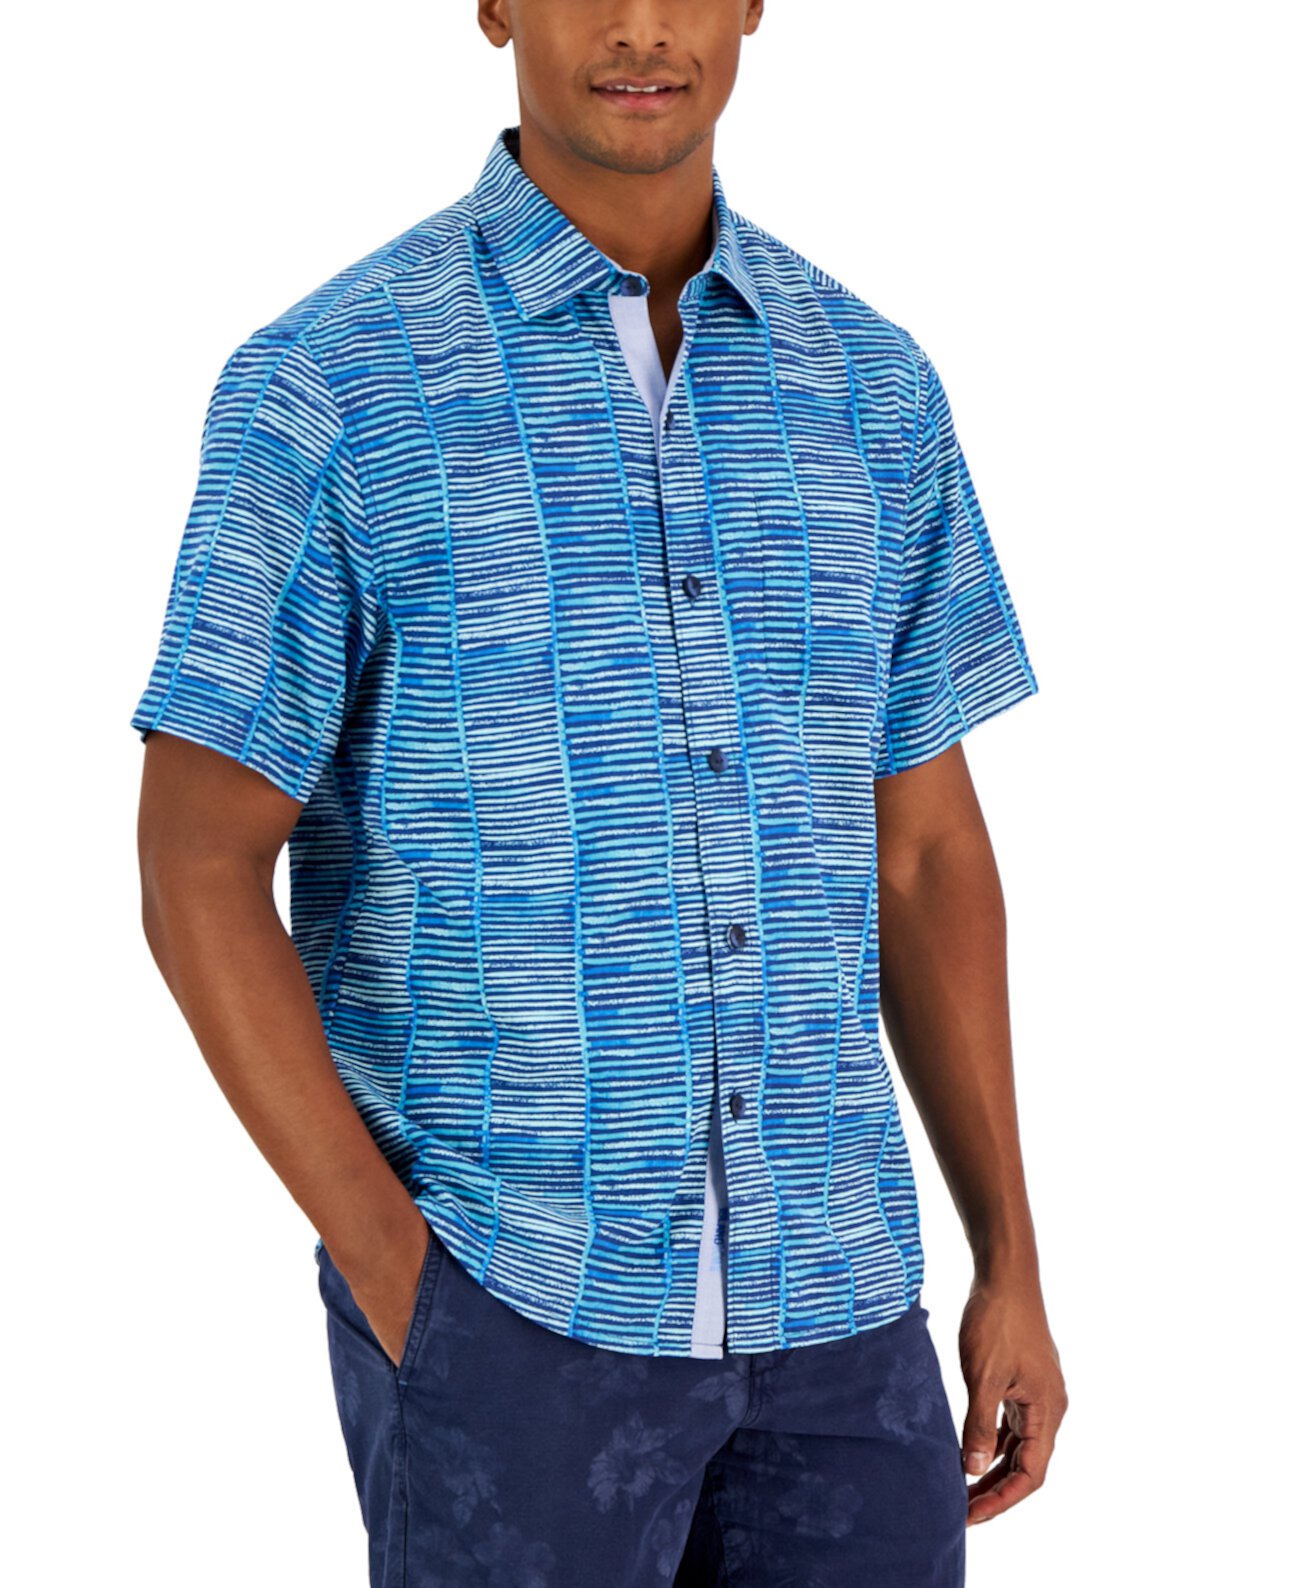 Мужская бамбуковая пляжная рубашка в полоску Tommy Bahama